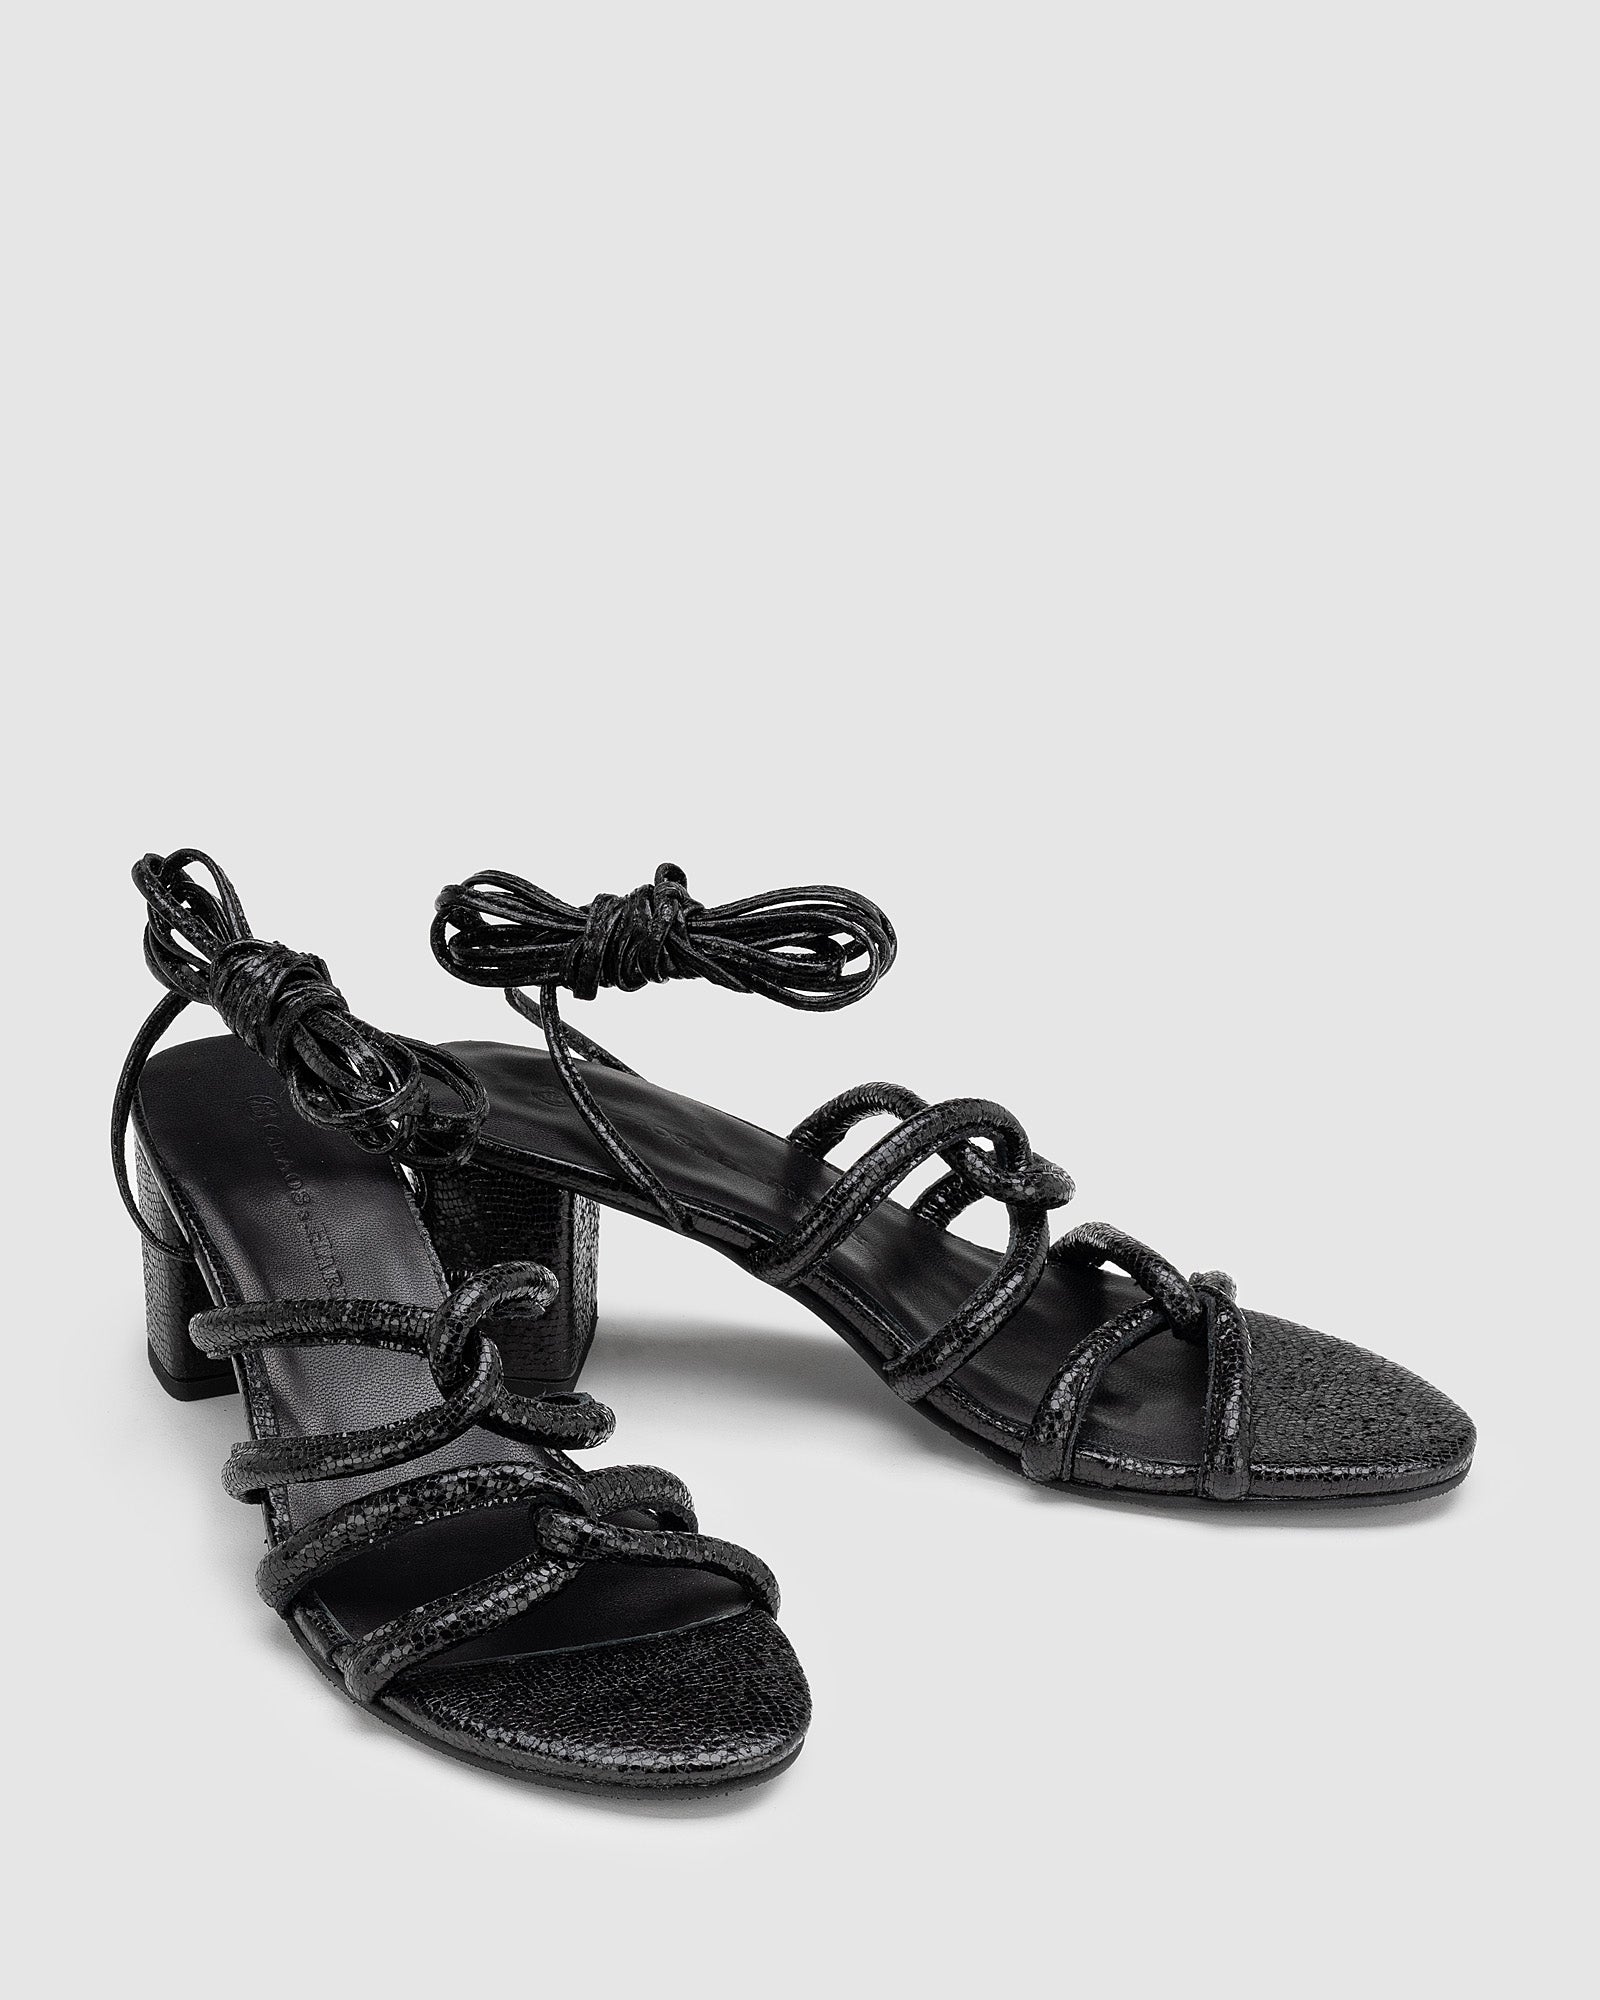 Twilight Heel - Black - Premium Heel from Chaos & Harmony - Just $149.0! Shop now at Chaos & Harmony